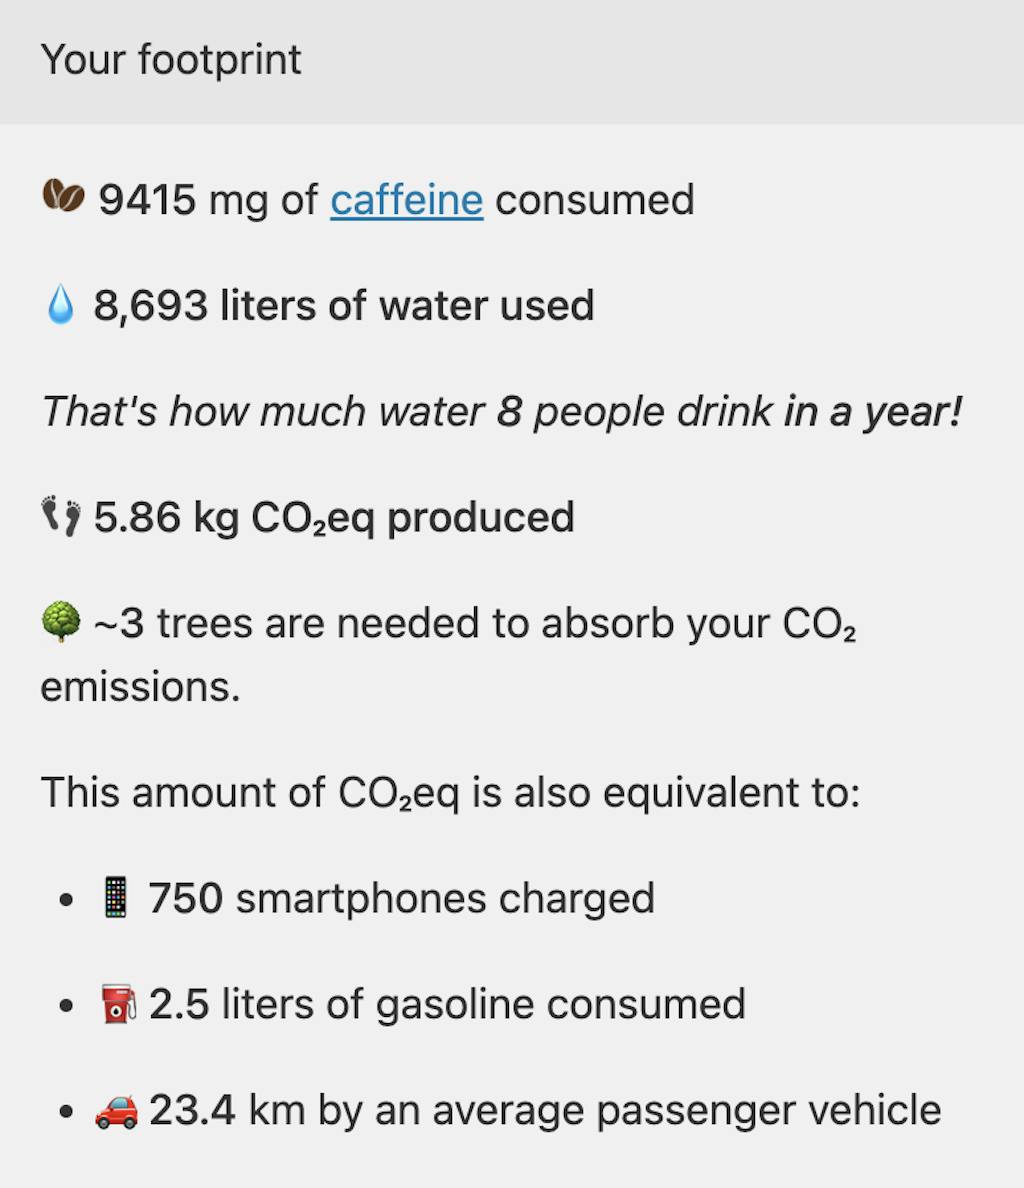 Calculatrice impact environnemental du cafe